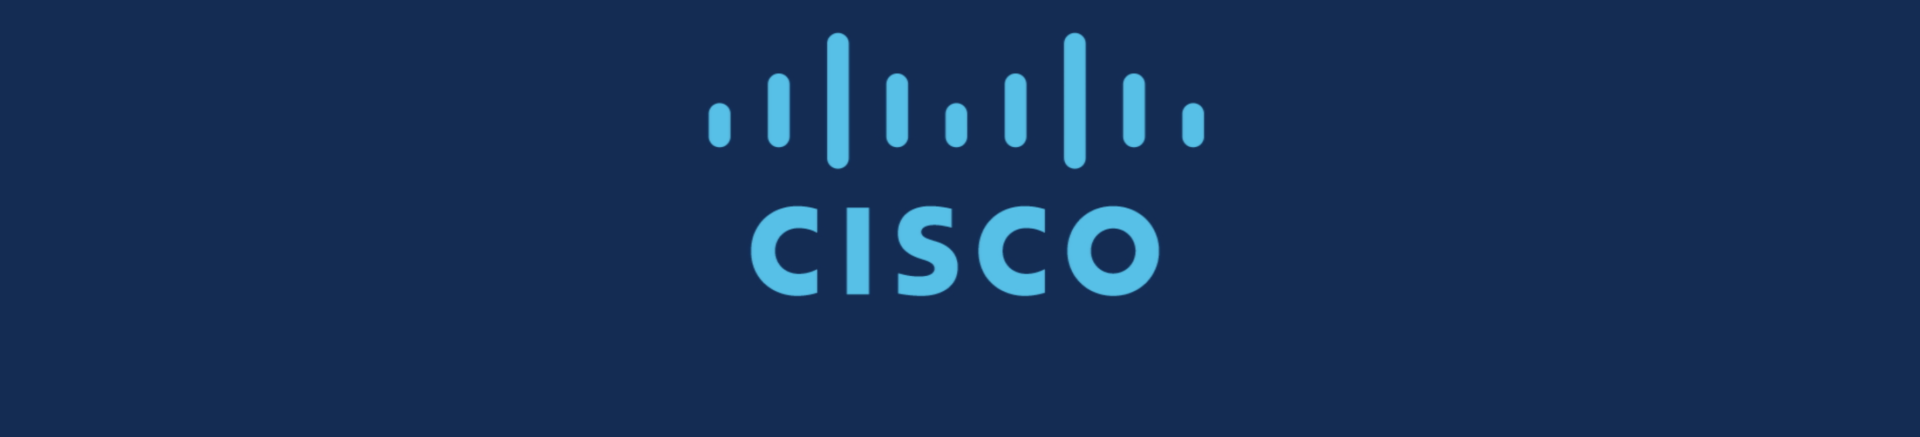 Cisco-Logo-Midnight-Blue.png